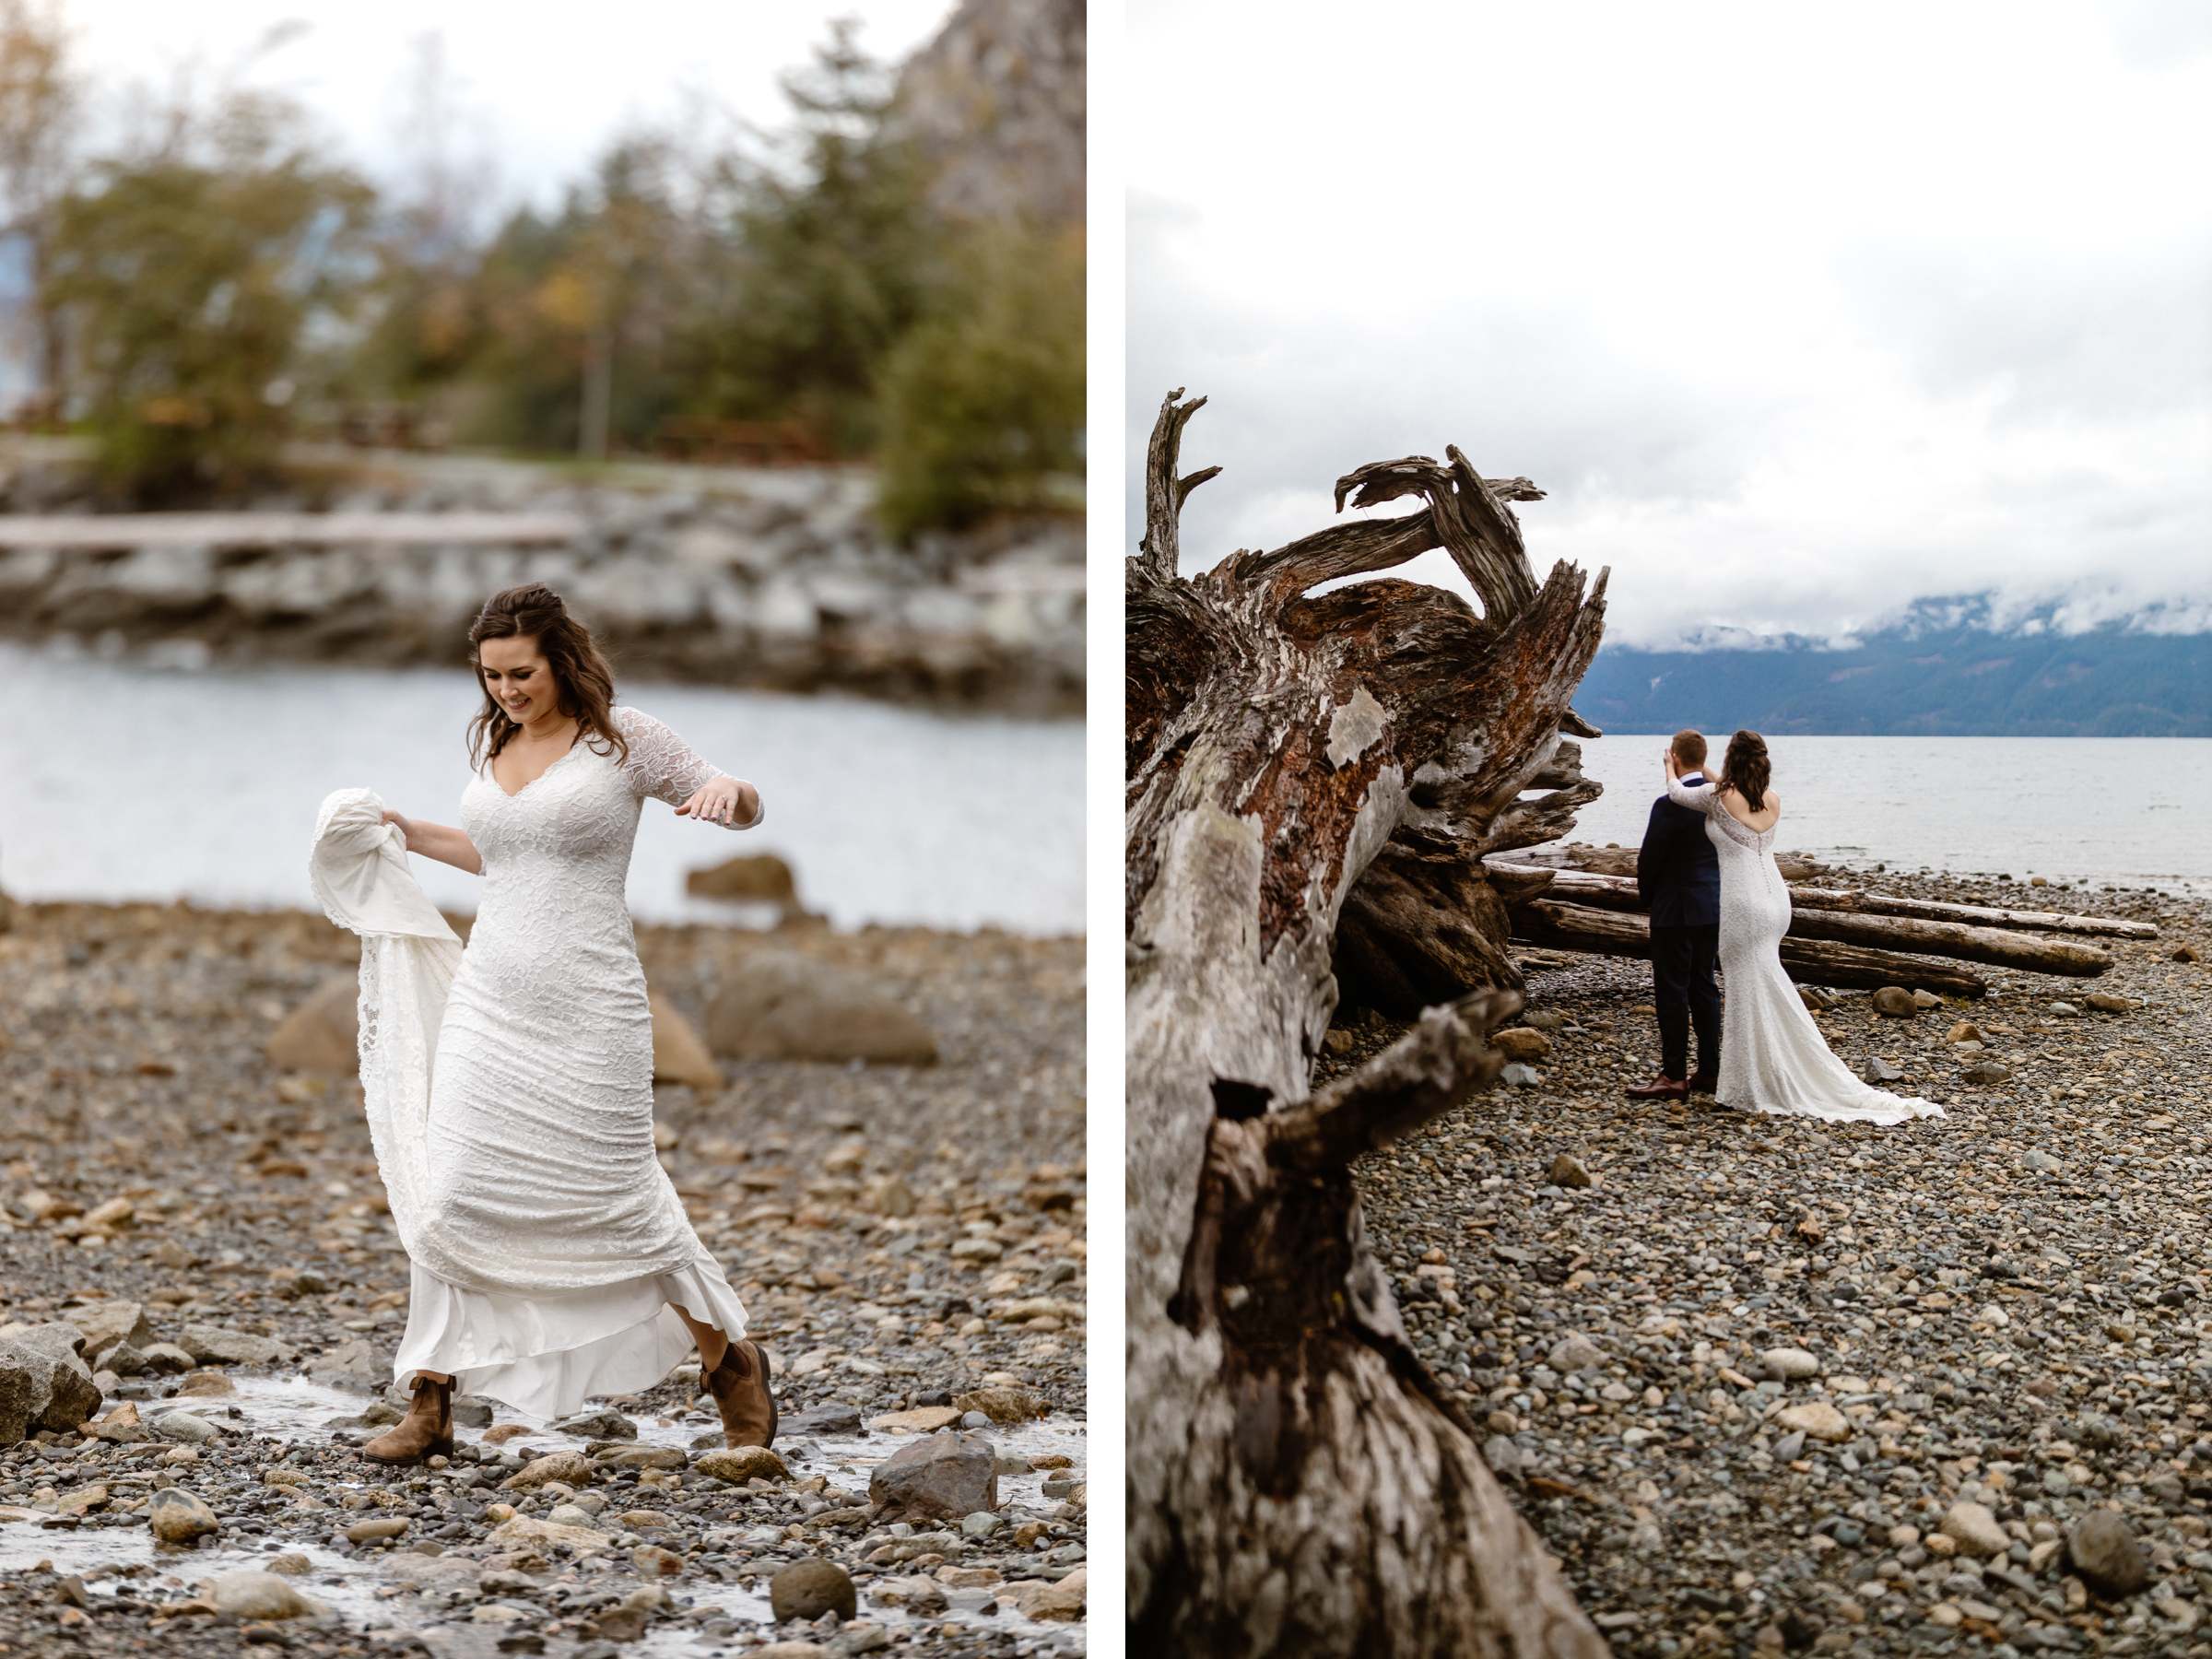 Squamish Wedding Photographers at an Adventurous Elopement - Image 3